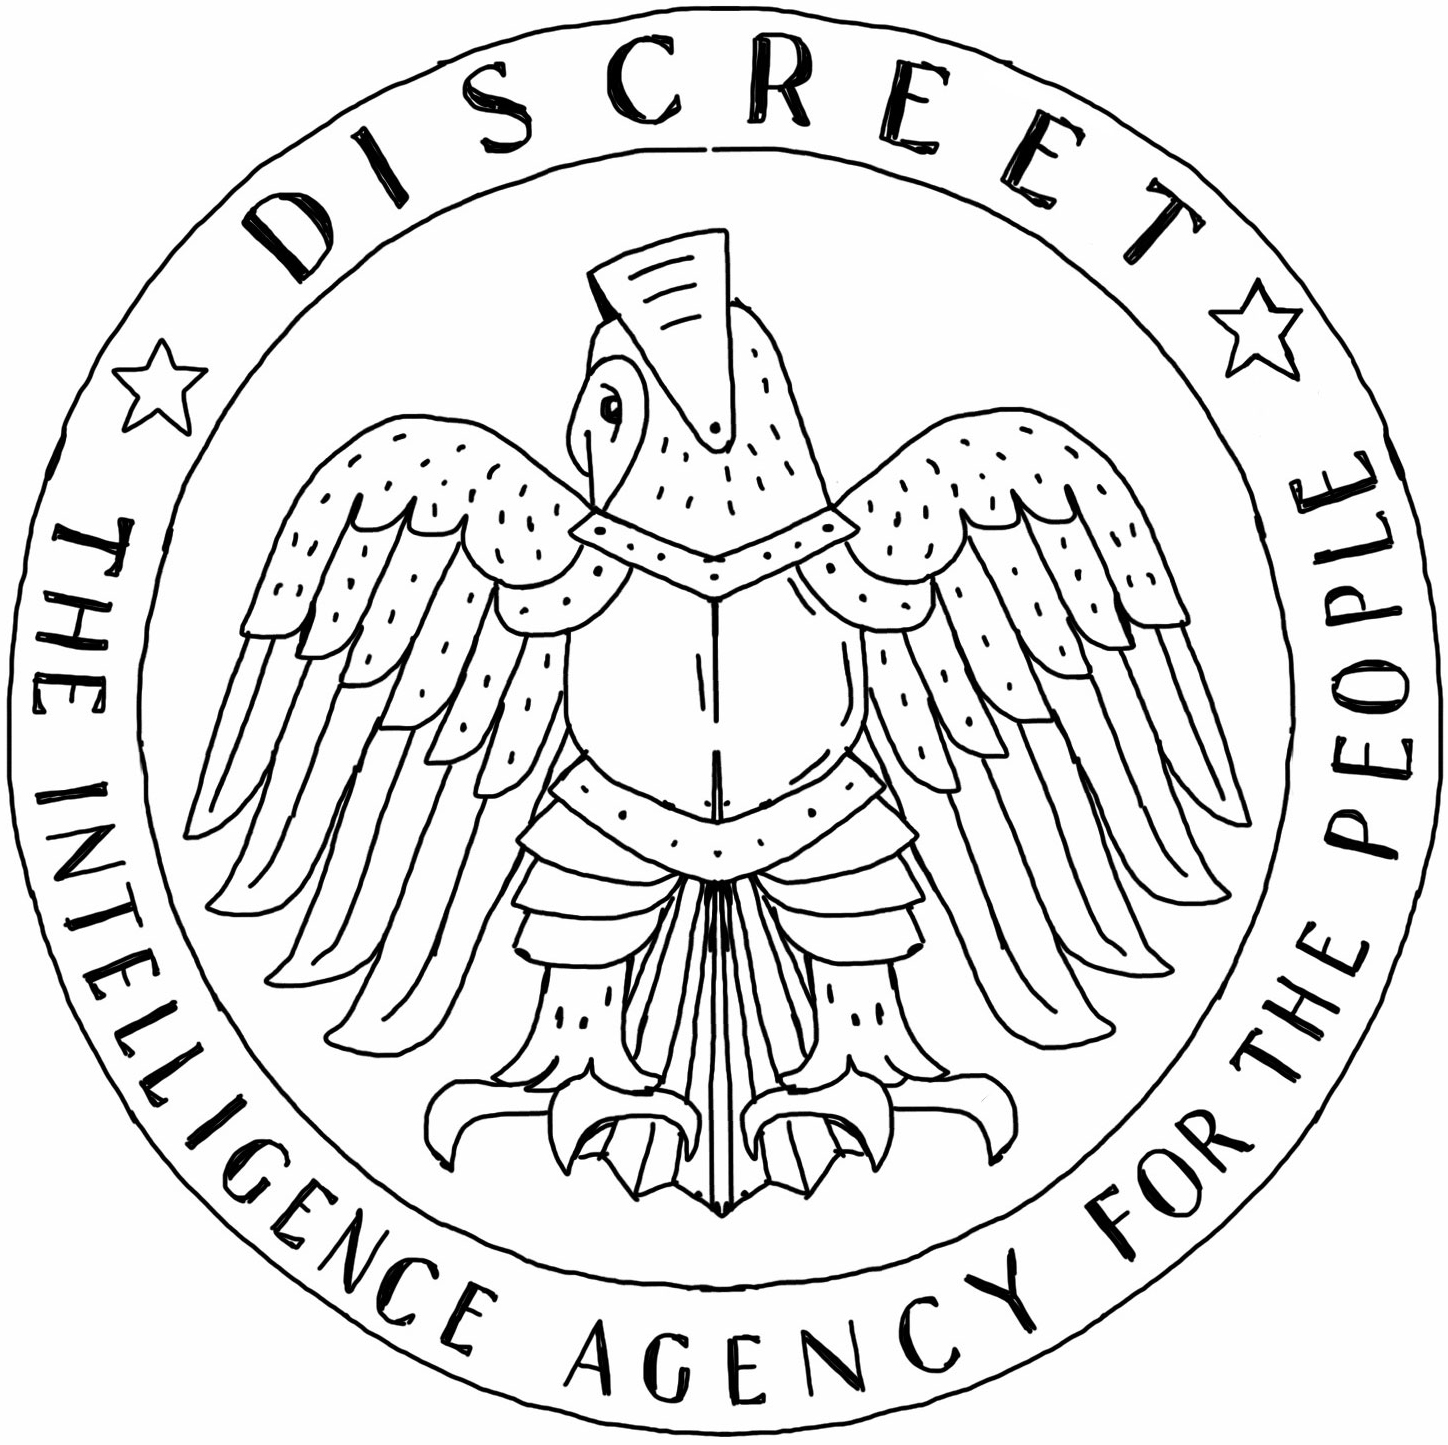 DISCREET_Logo-for-web crop